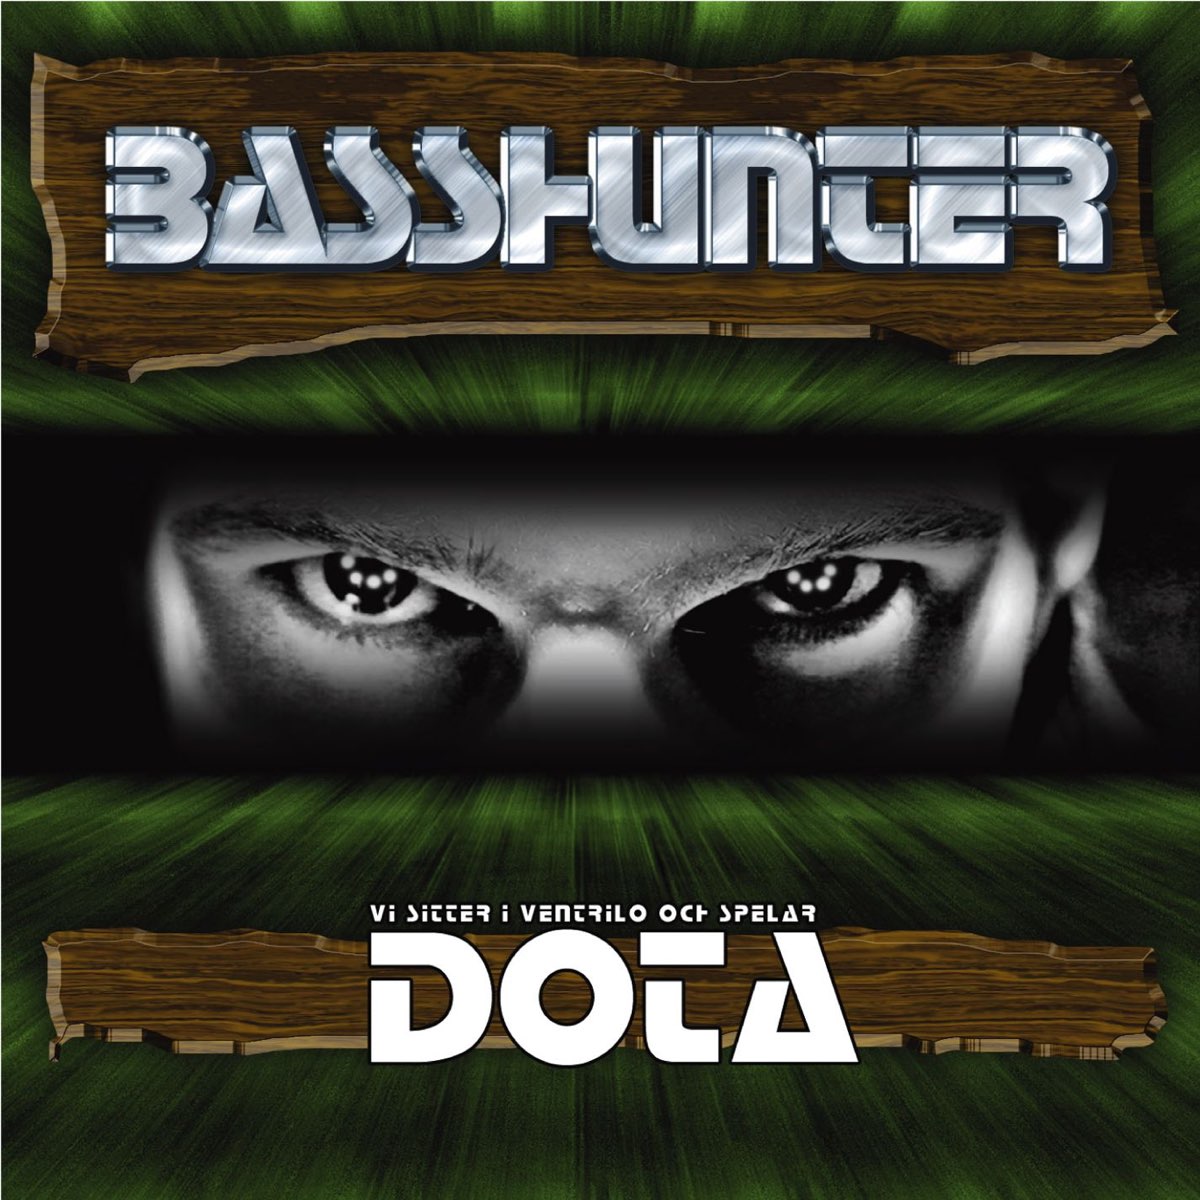 Basshunter Dota. Vi Sitter i Ventrilo och spelar Dota. Basshunter Dota 20. Vi Sitter i Ventrilo och spelar Dota (Extended Version). Basshunter vi sitter i ventrilo